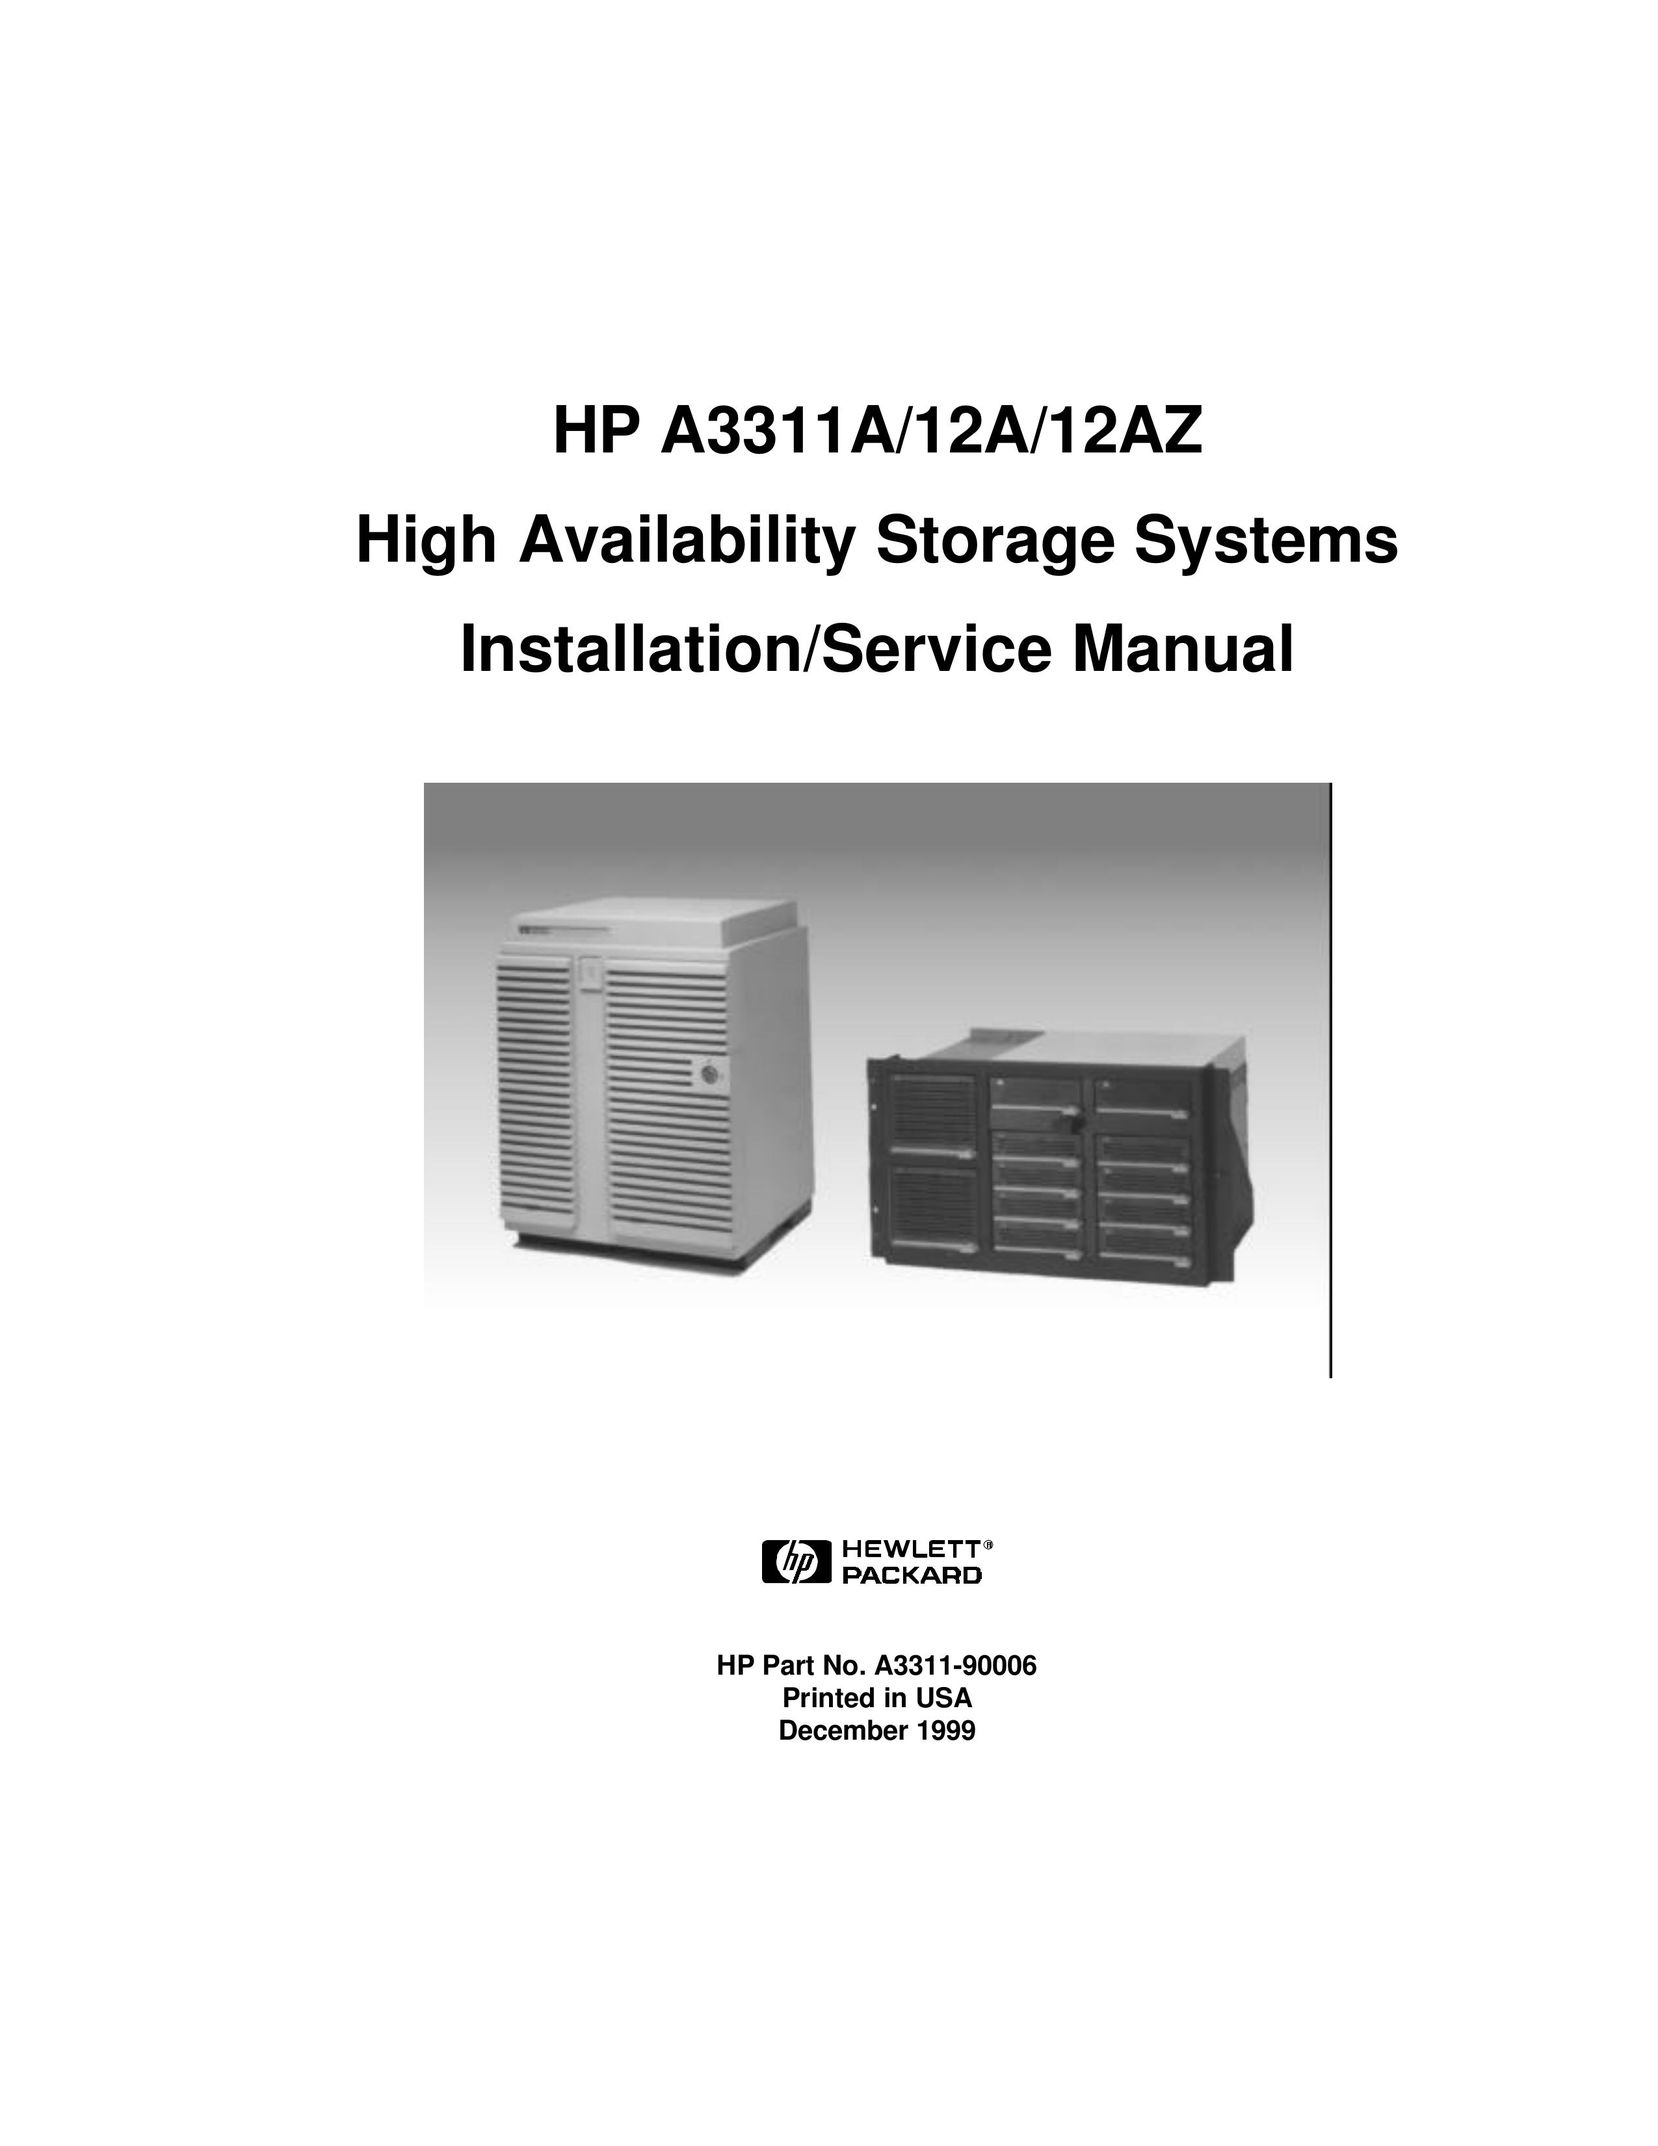 HP (Hewlett-Packard) A3311A Tool Storage User Manual